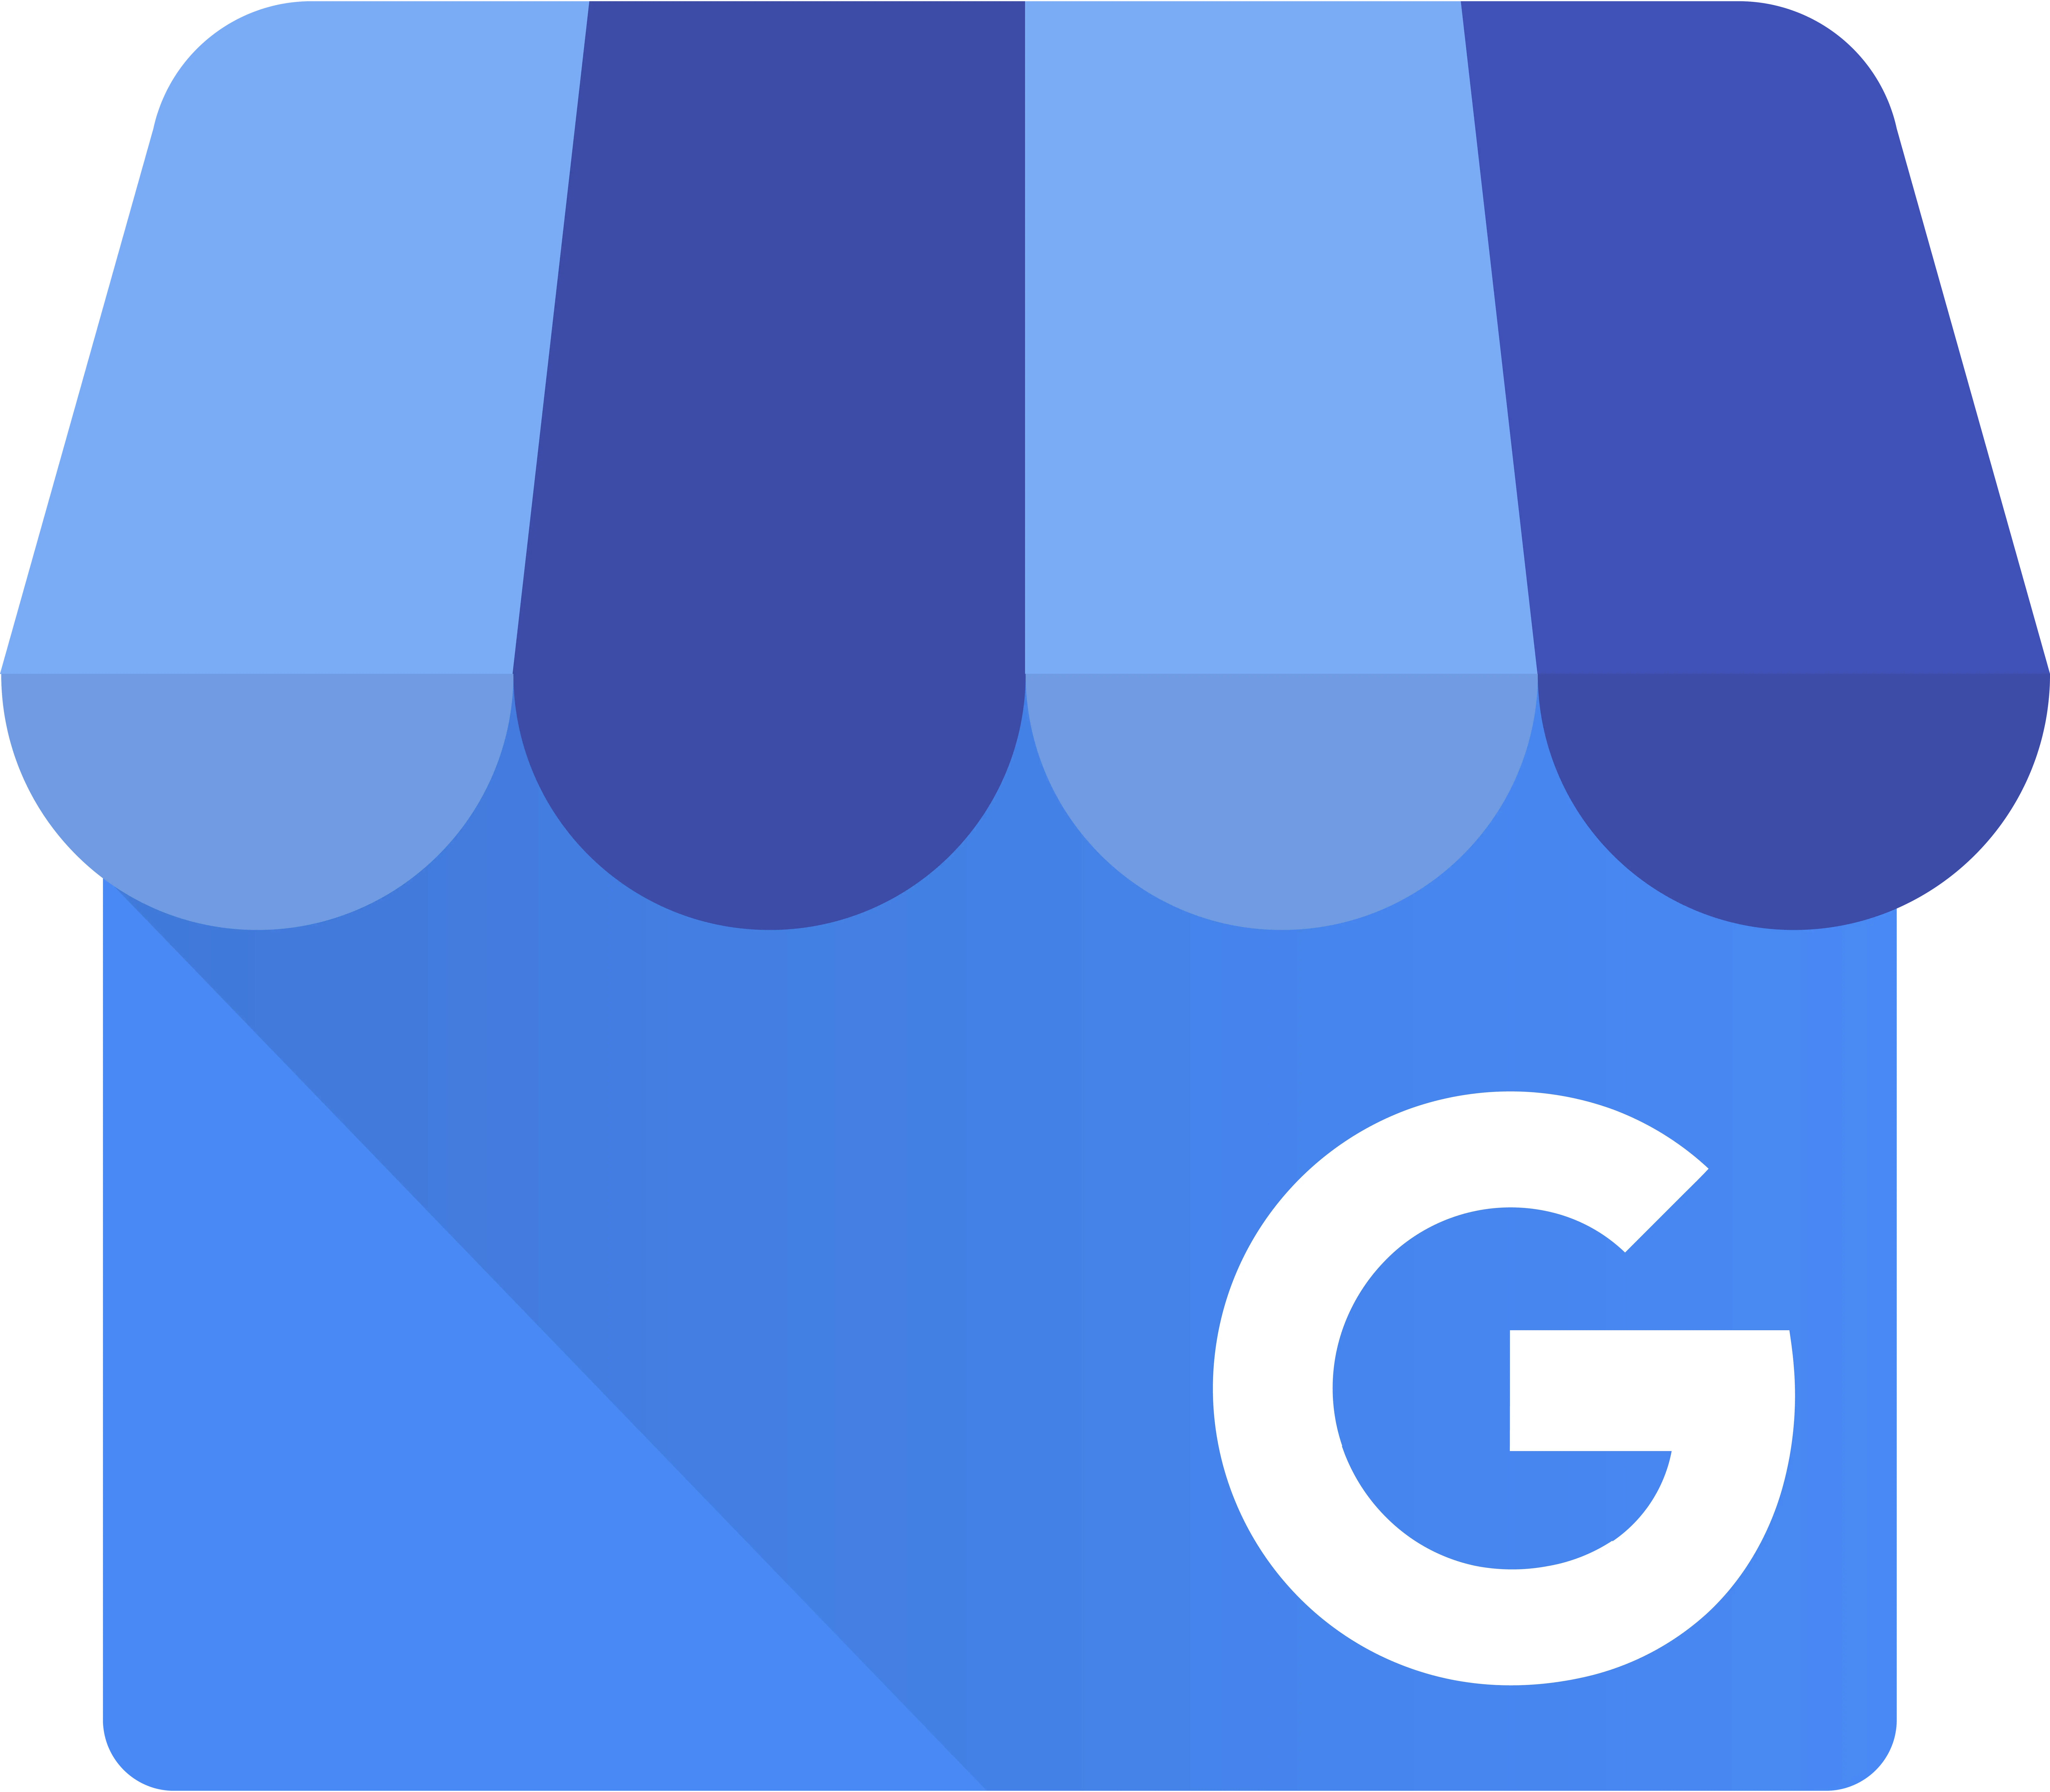 Google local business logo.